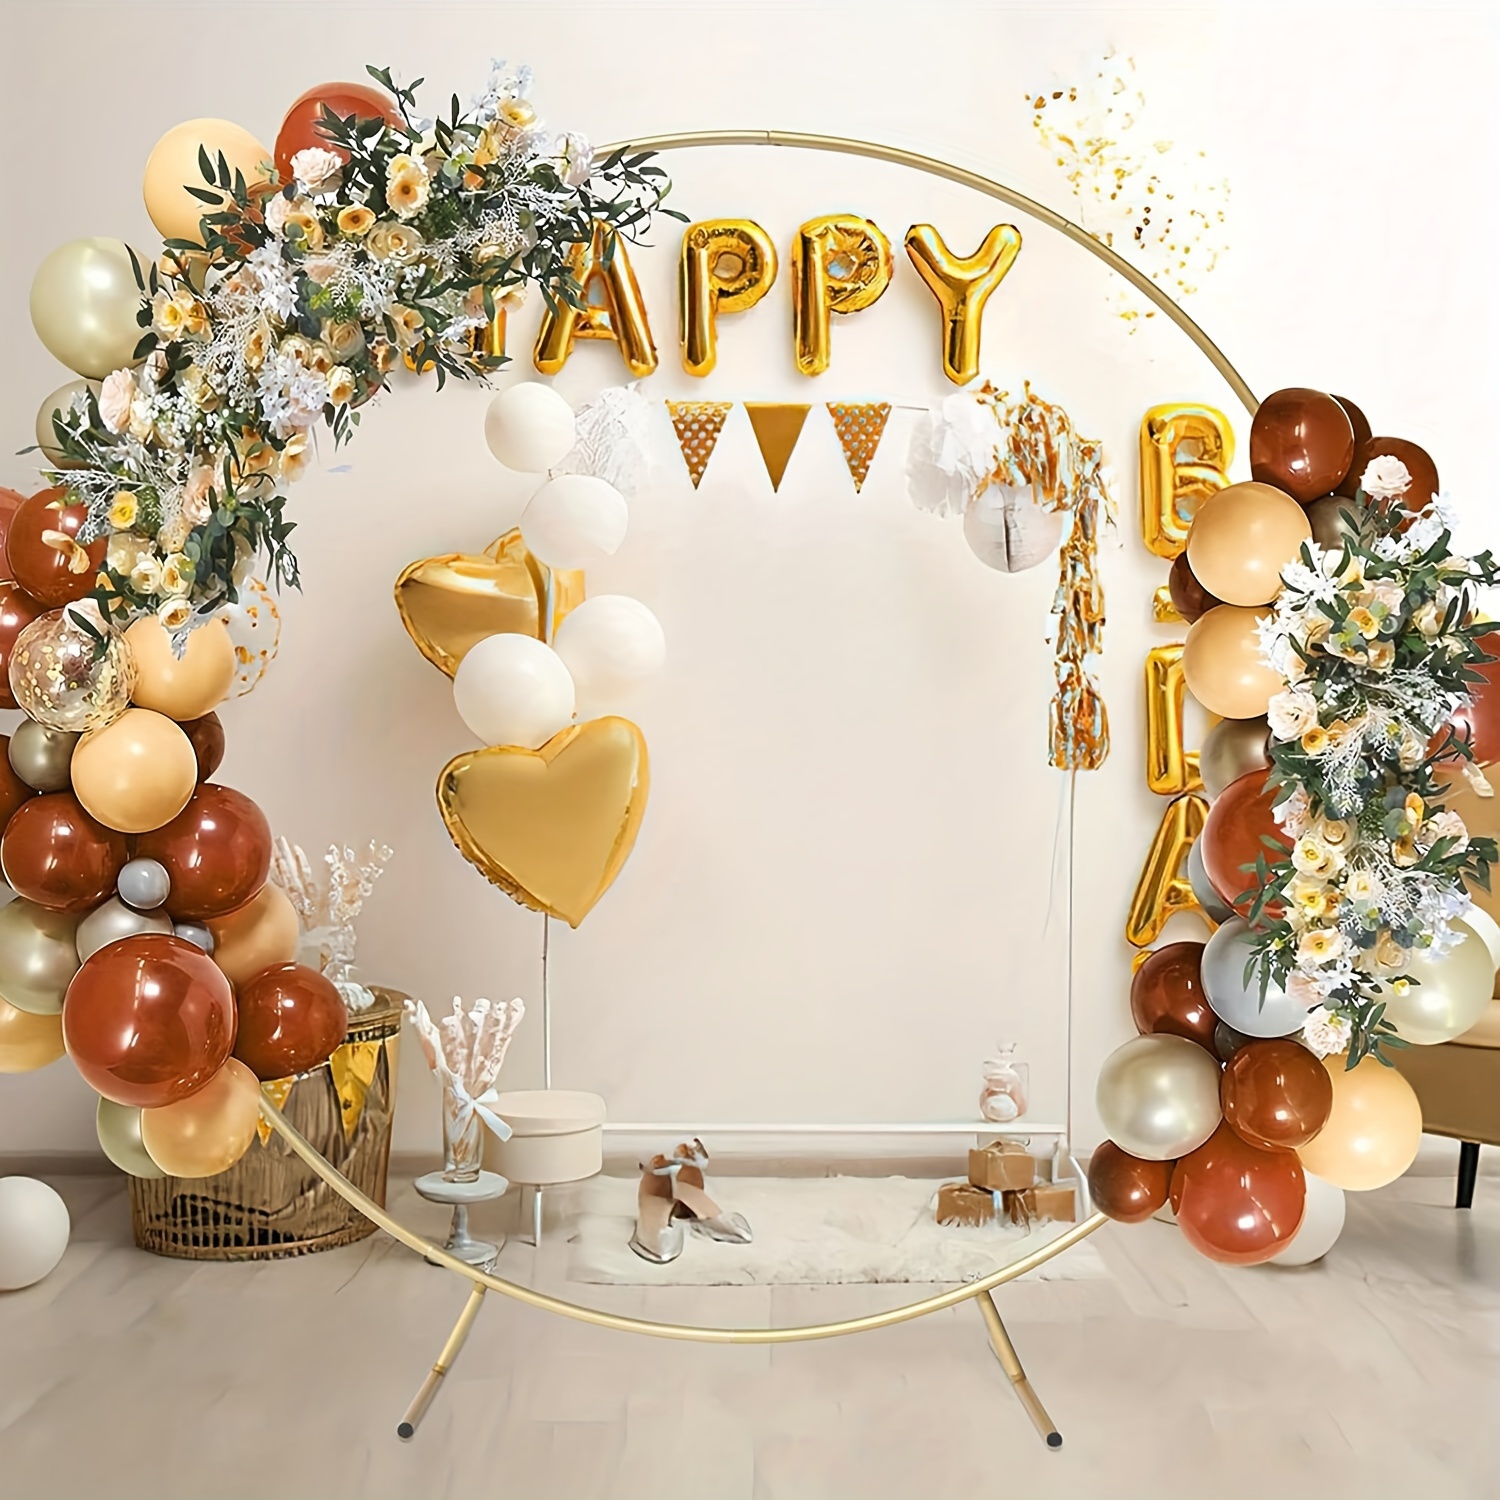 Balloon Accessories Set For Weddings, Christmas, Birthdays